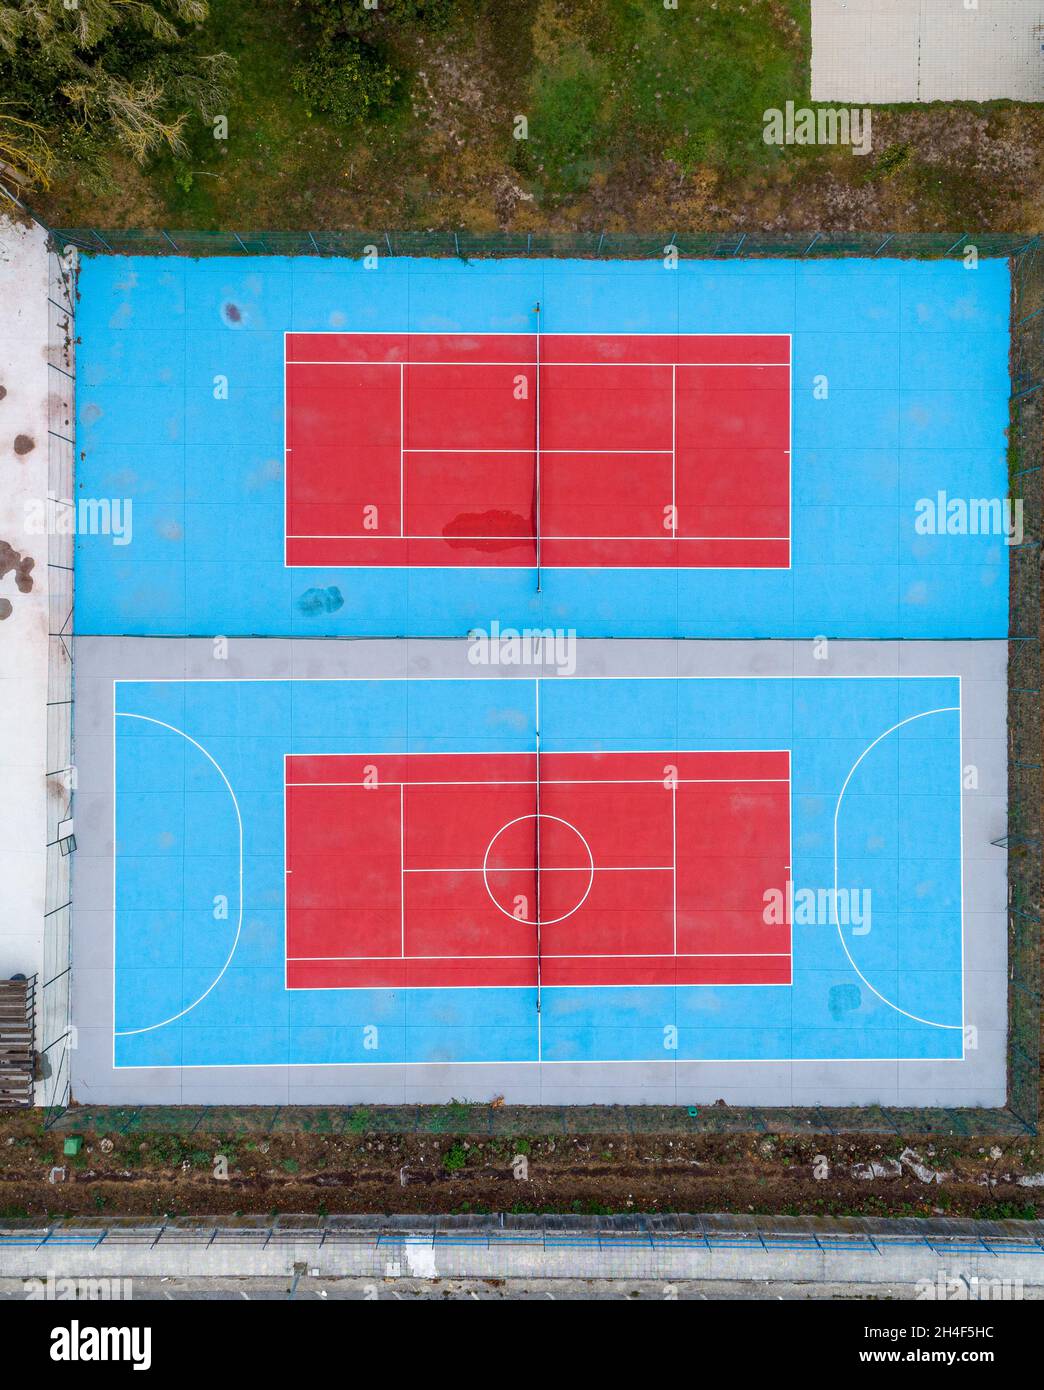 Vista aerea di due campi da tennis vuoti Foto Stock